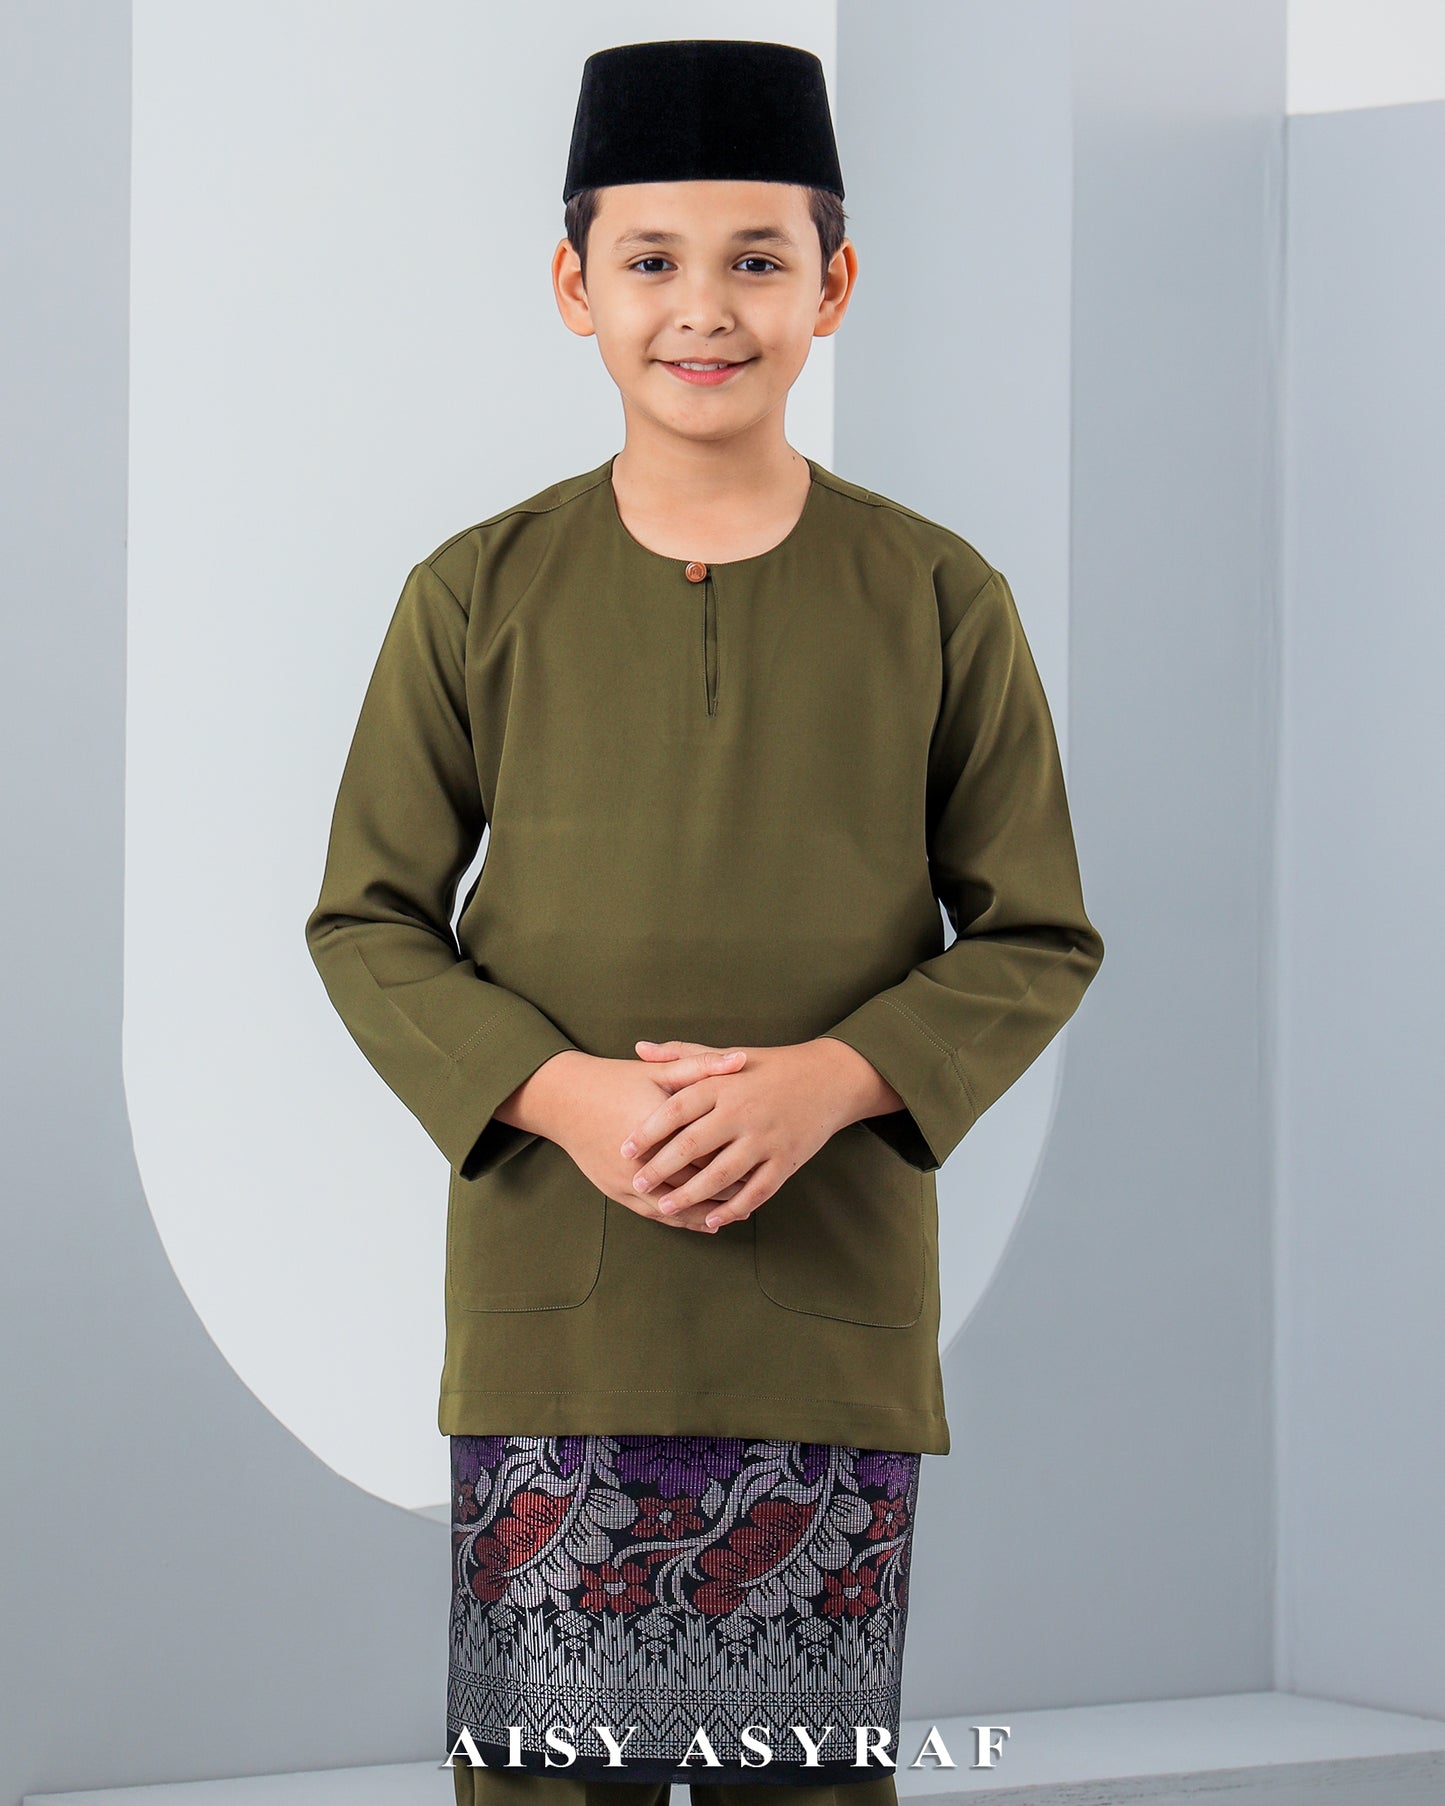 Baju Melayu Antalya Kids - Moss Green